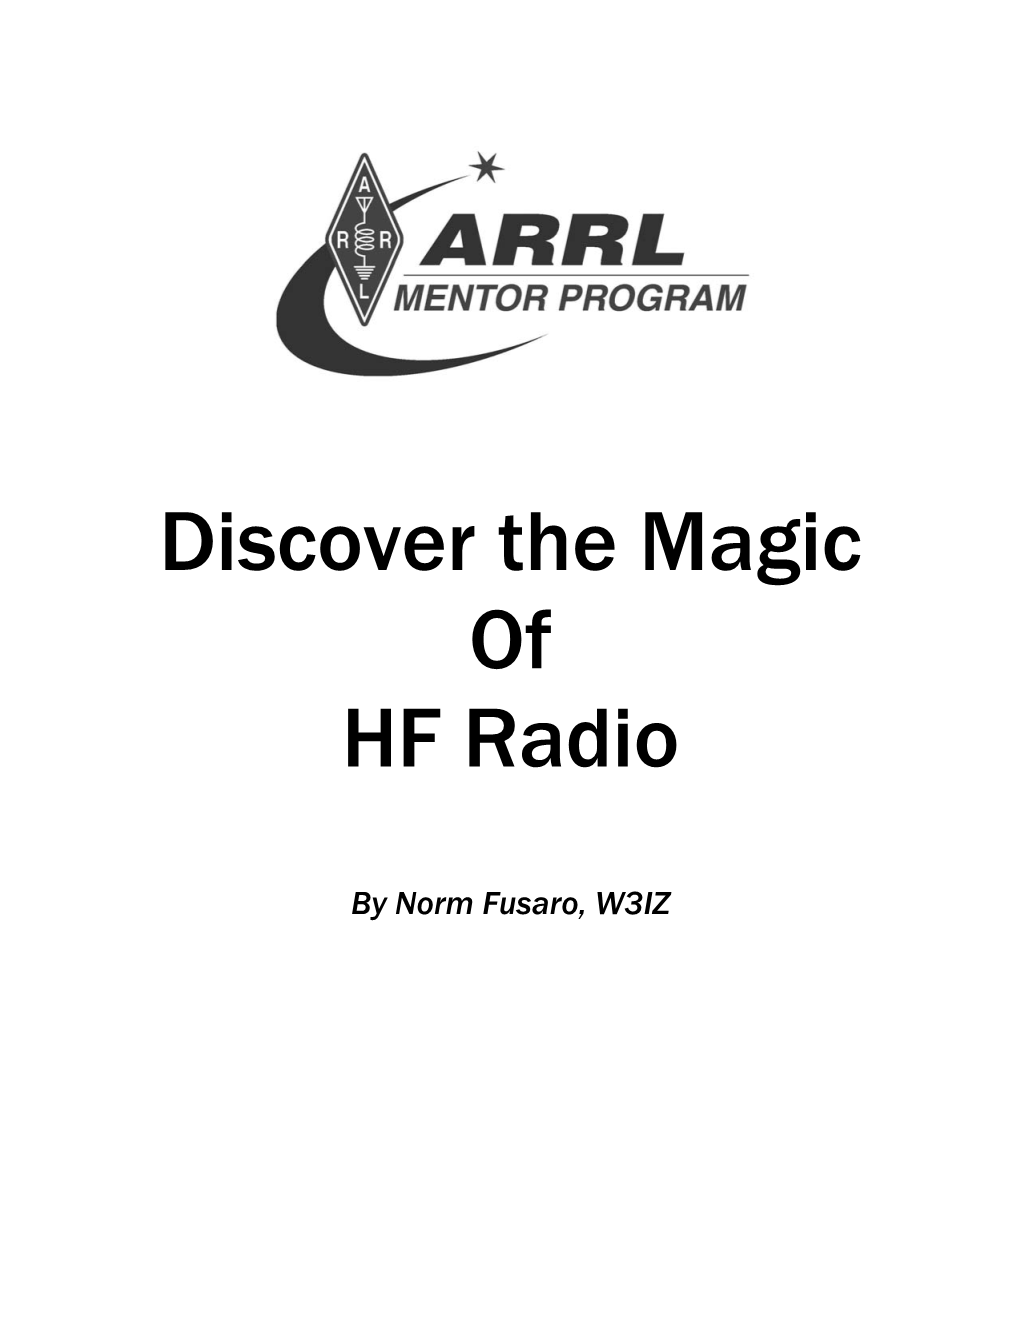 Discover the Magic of HF Radio